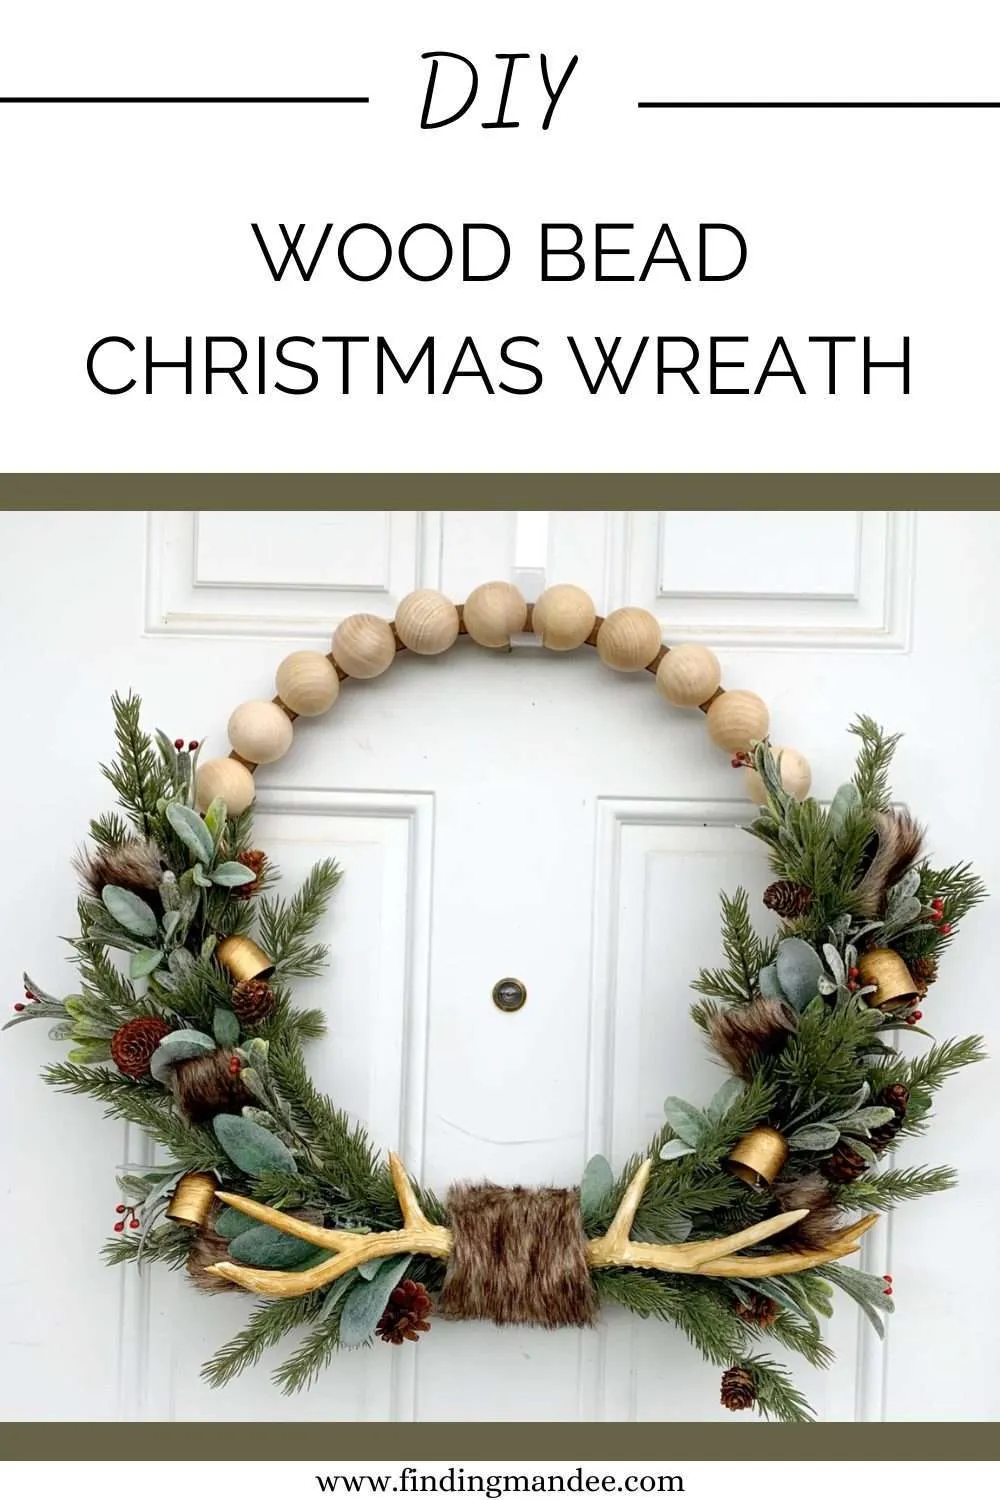 DIY Rustic Wood Bead Christmas Wreath | Finding Mandee